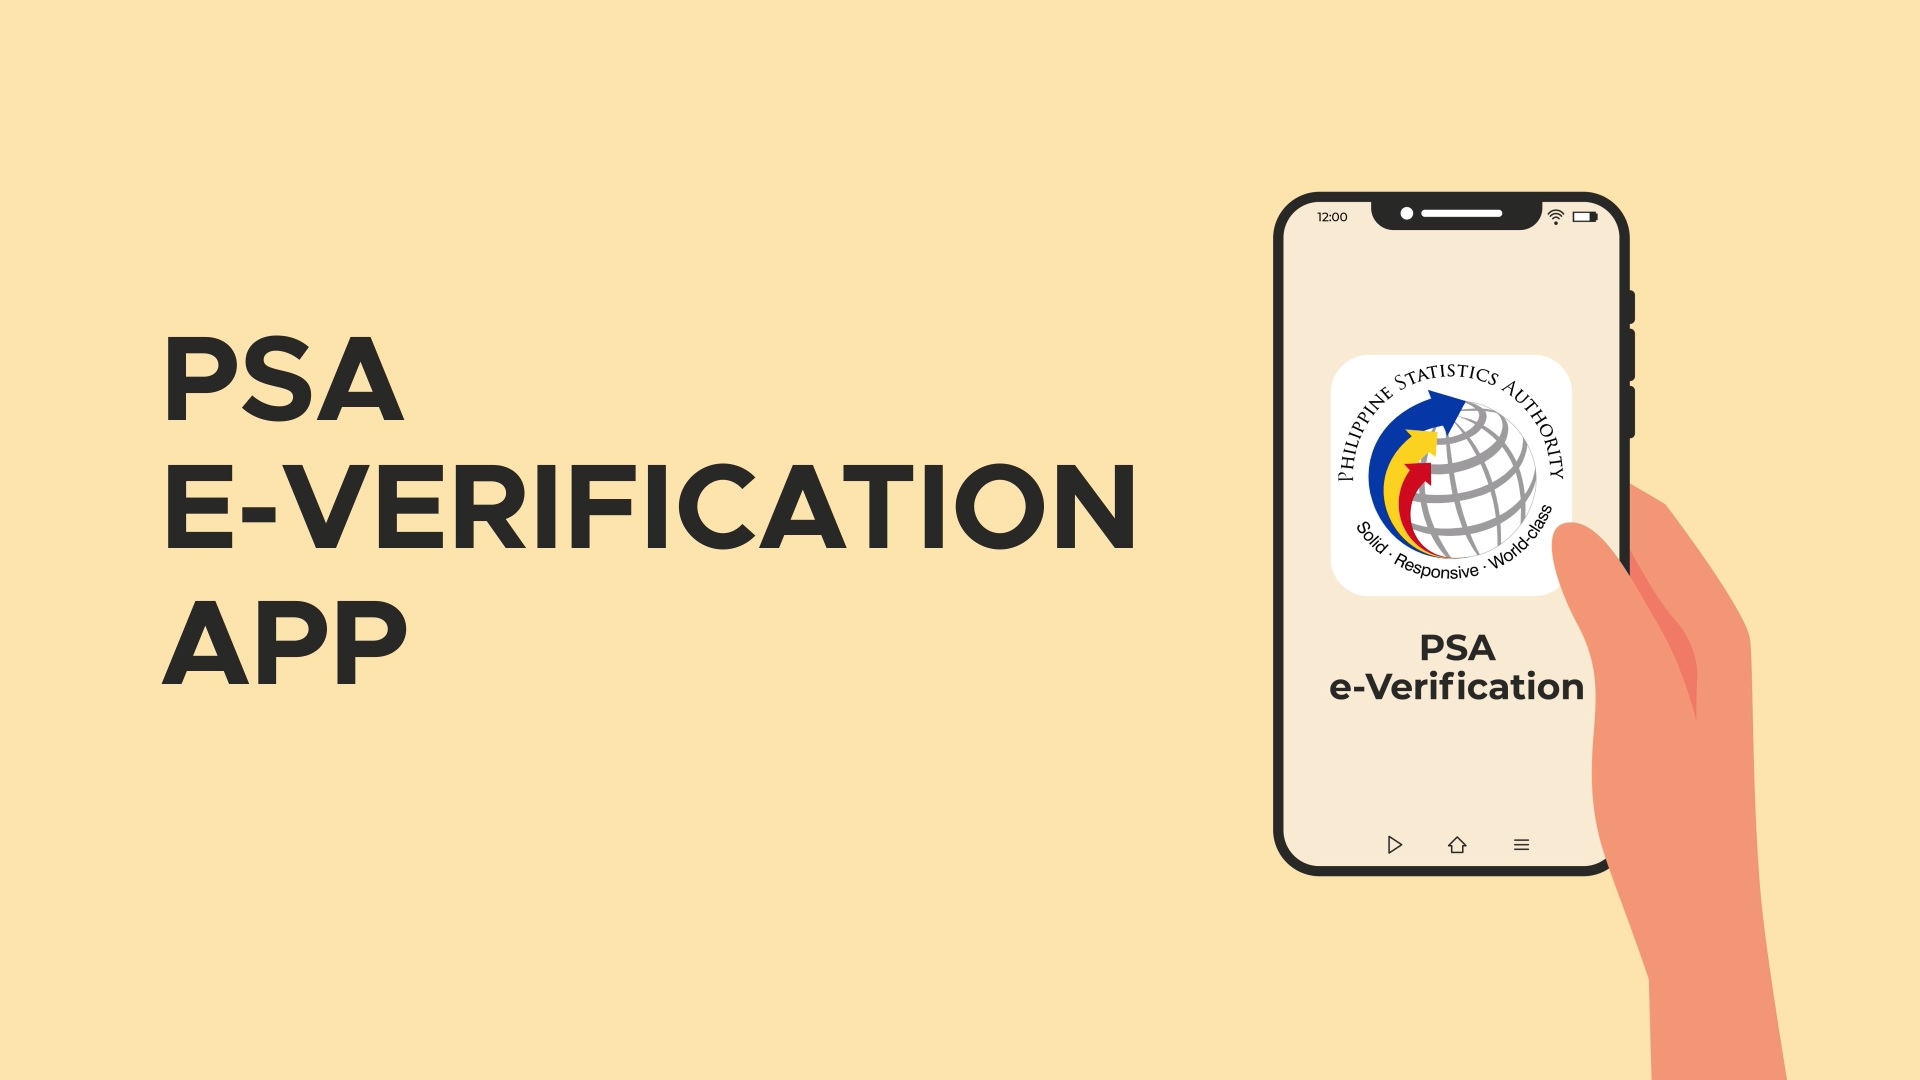 PSA e-verification App